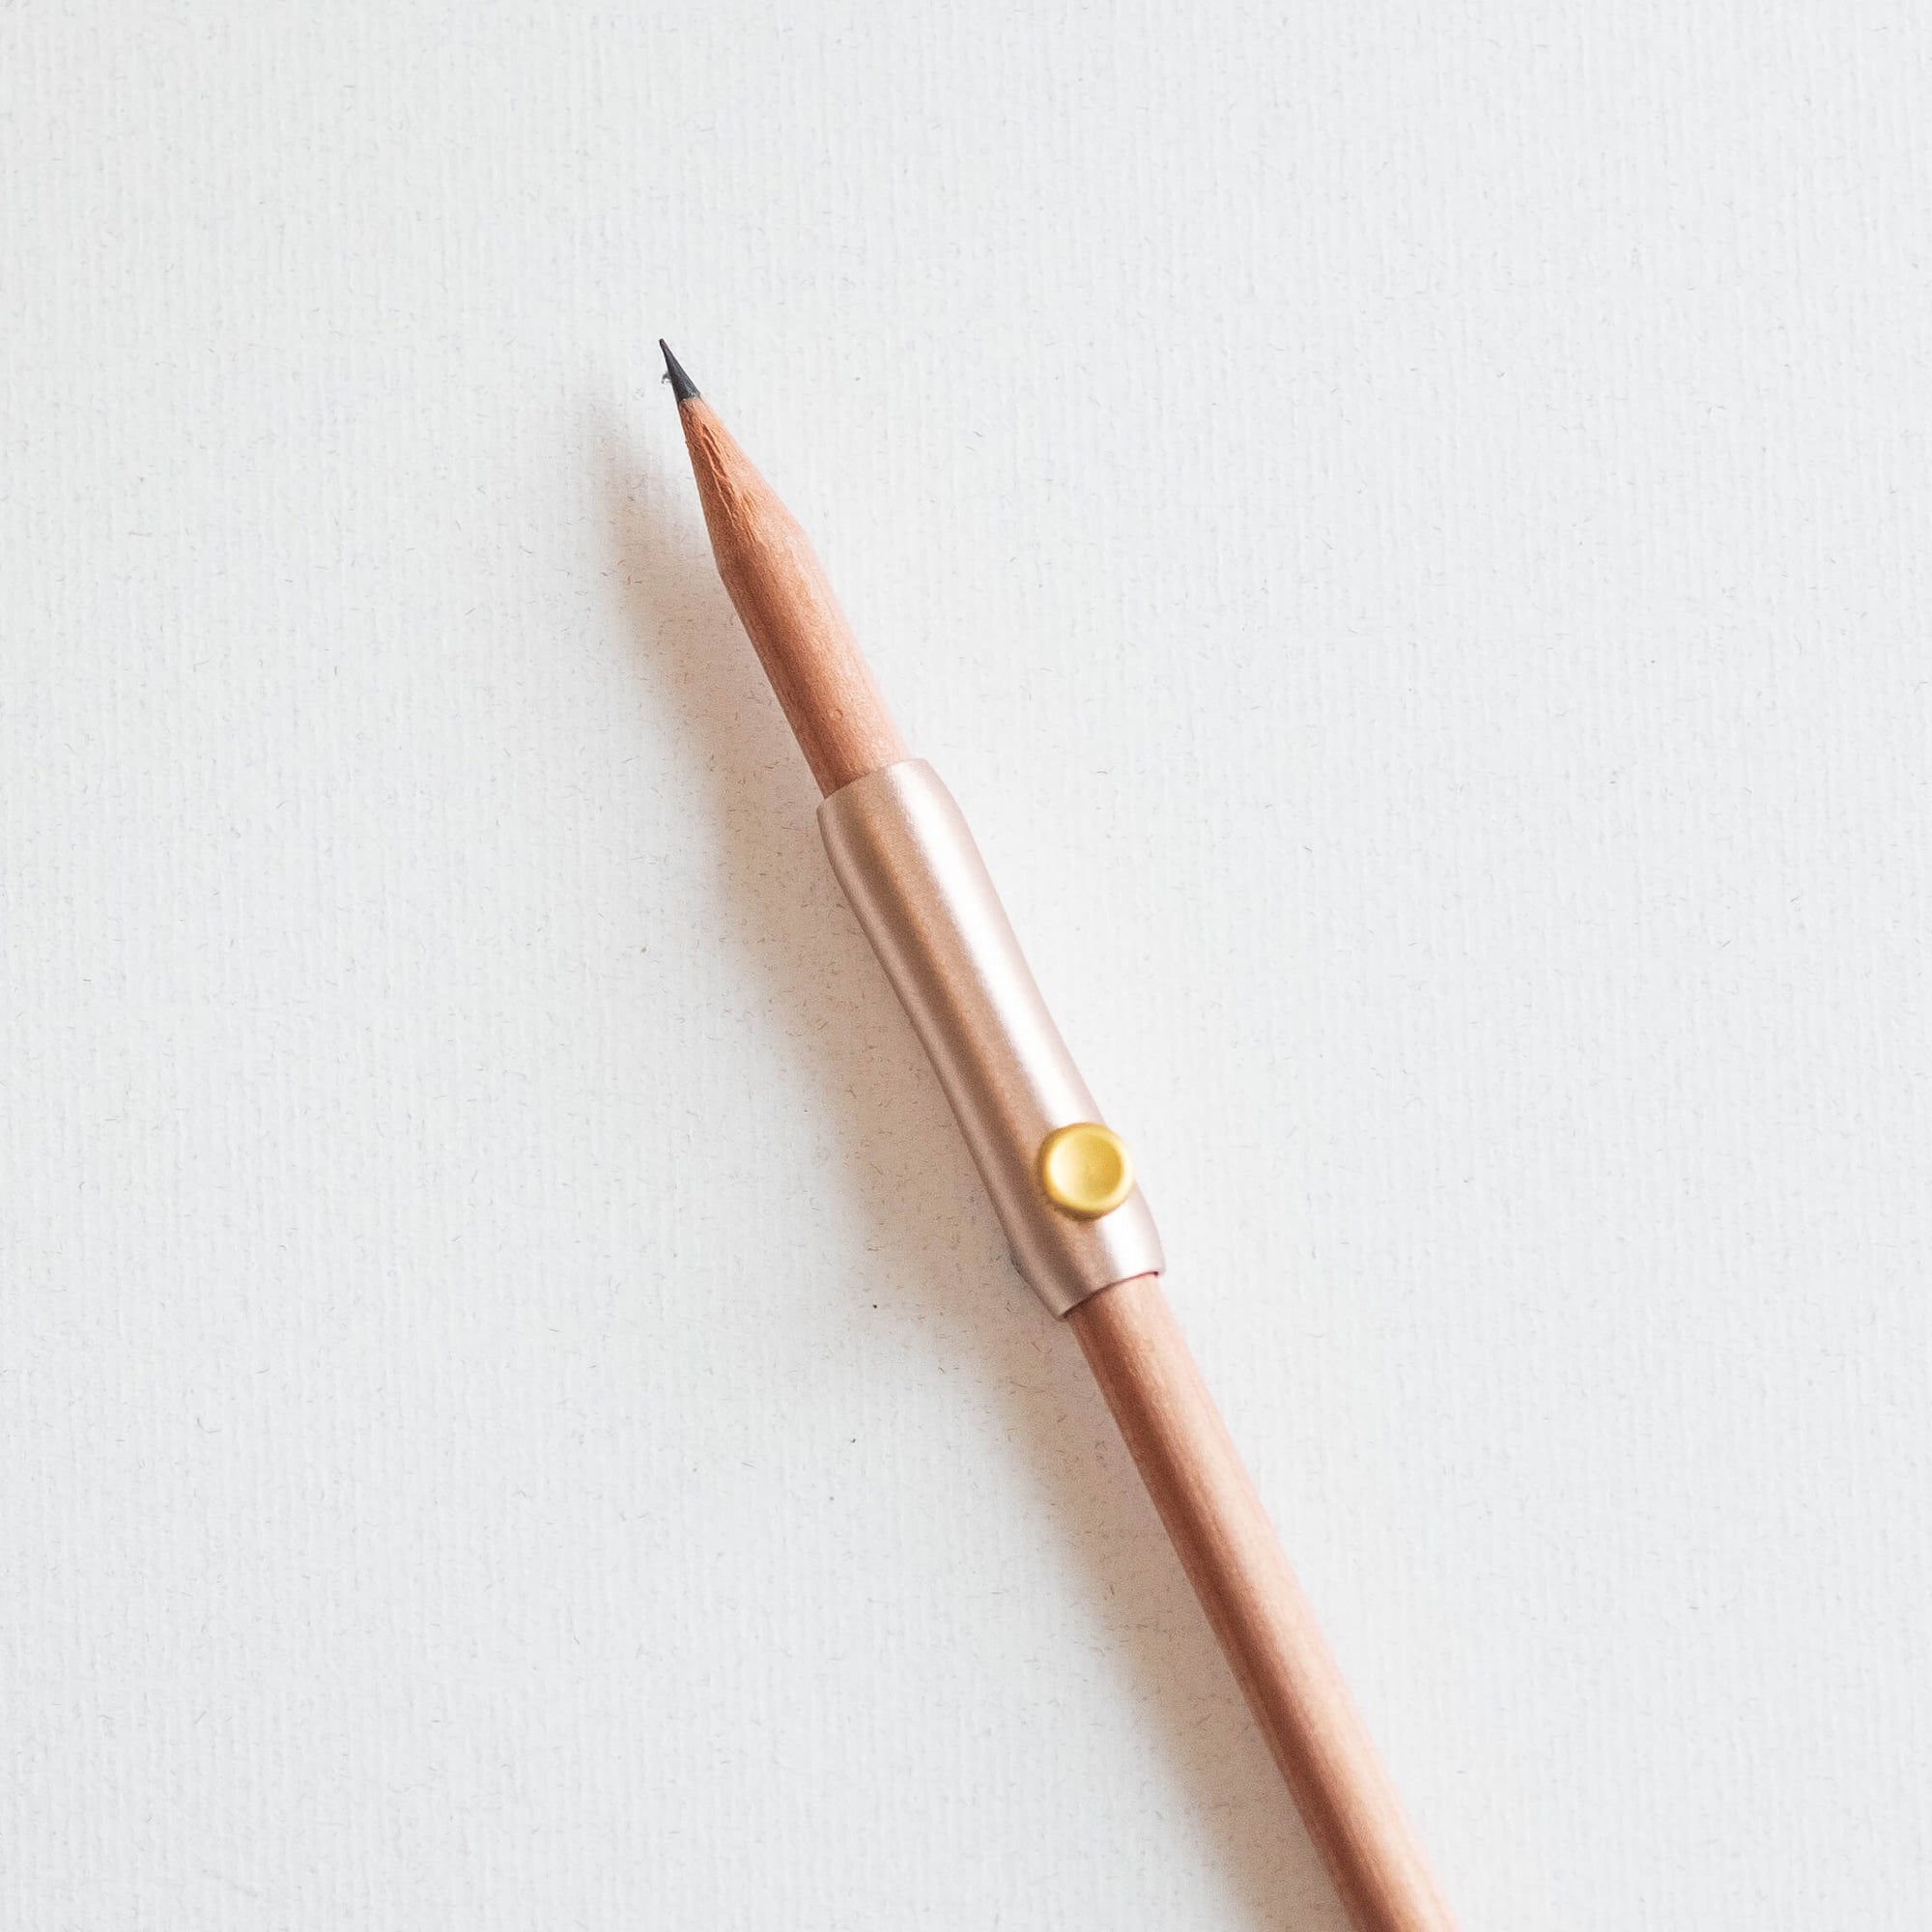 The Poise - Pencil Grip &amp; Extender